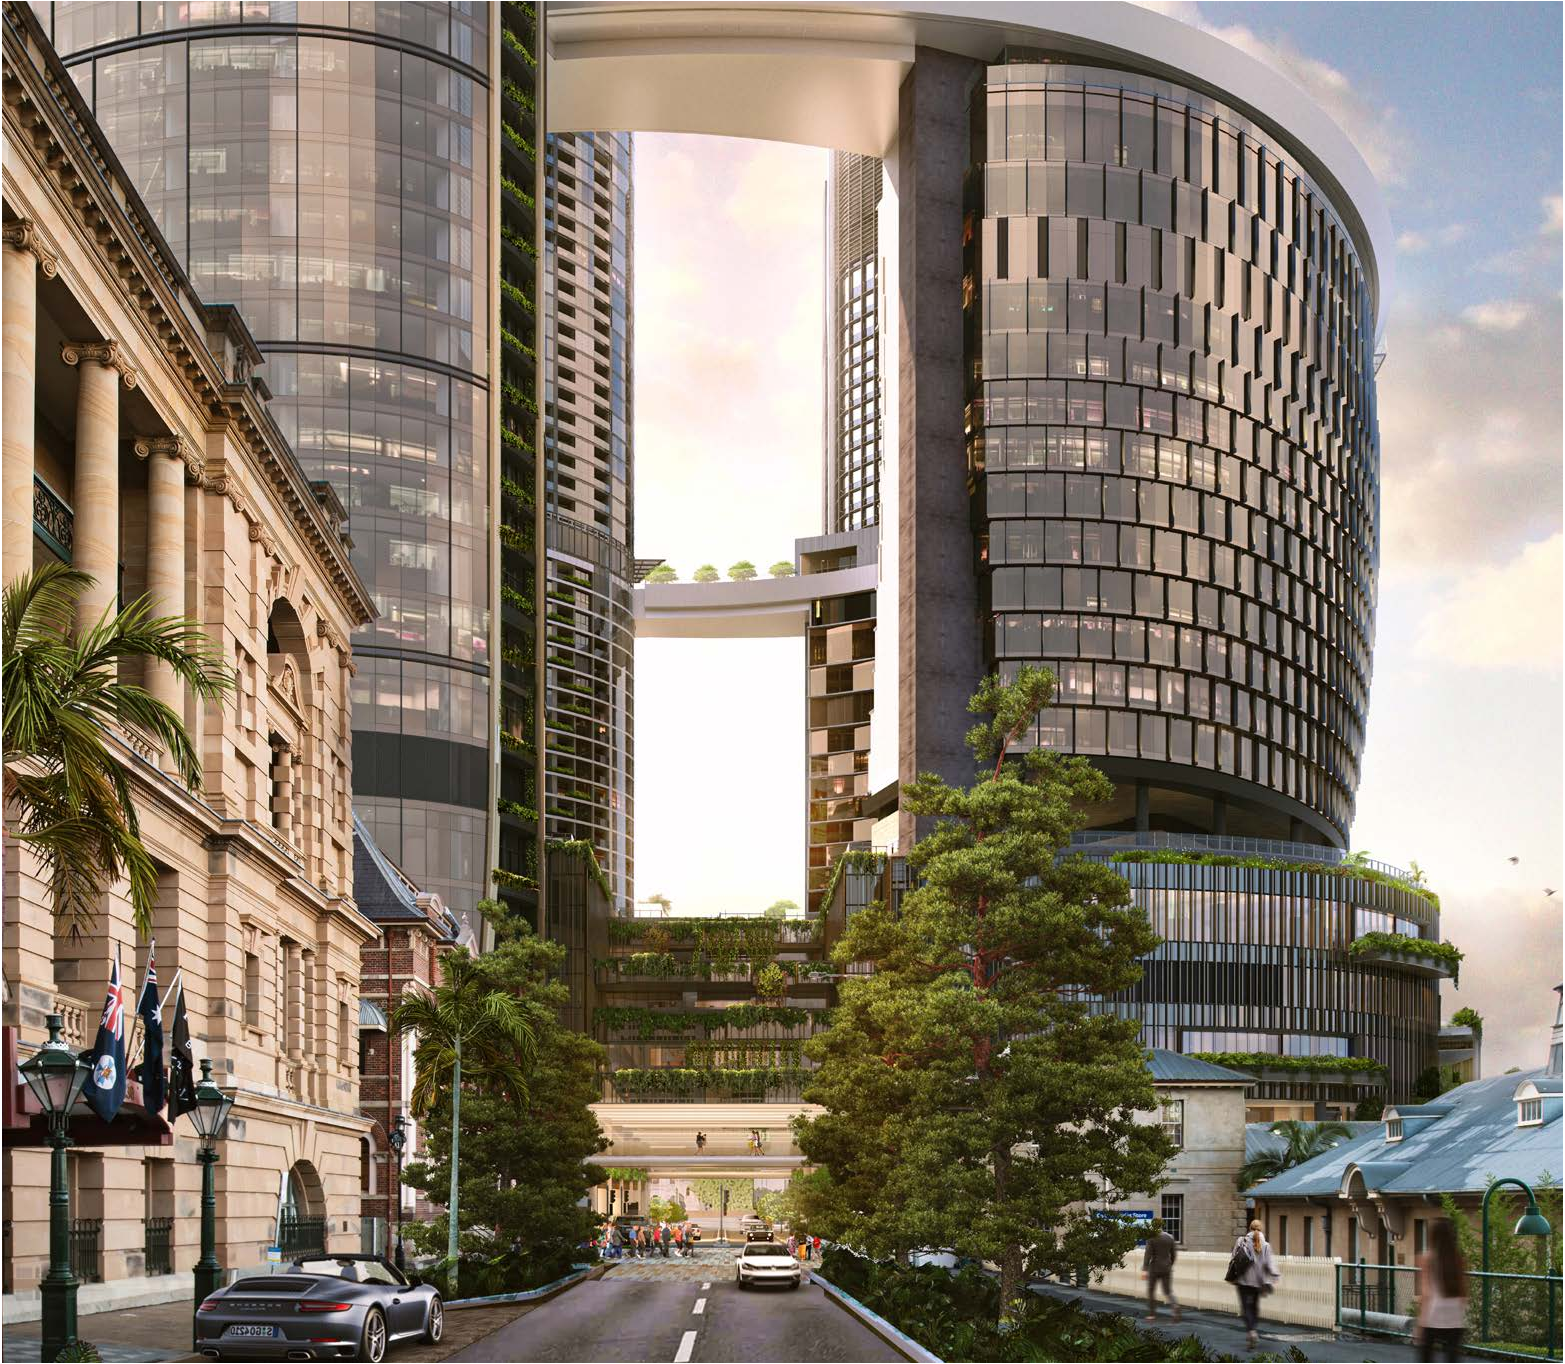 [HOT] Queen’s Wharf – biểu tượng mới của Brisbane